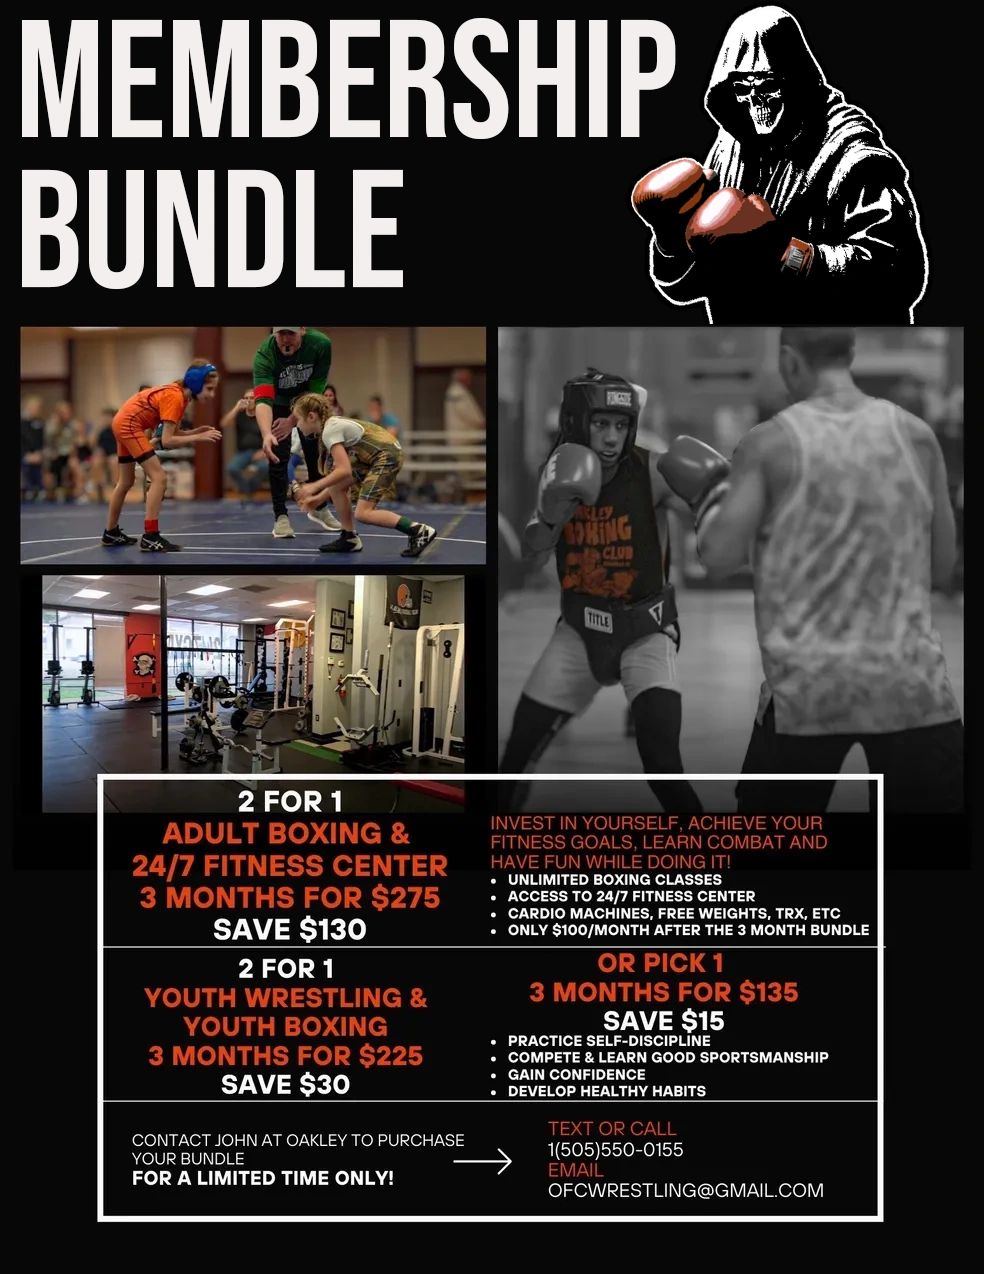 Oakley OFC Gyms membership bundle in Asheville North Carolina, boxing, wrestling 24/7 gym